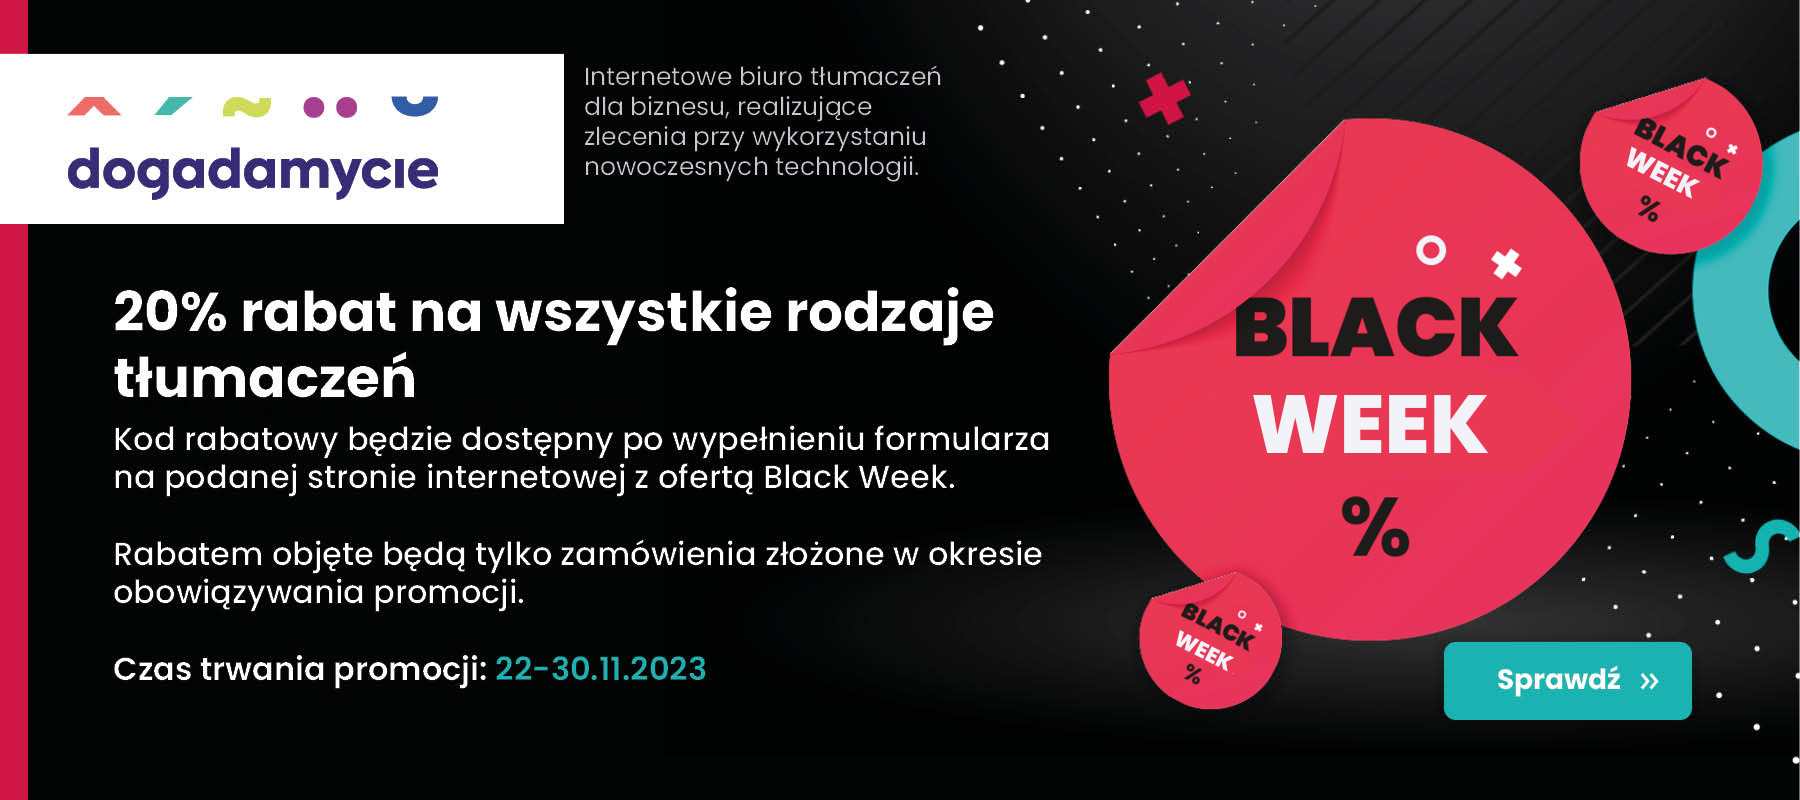 Dogadamycie.pl Black Week 2023